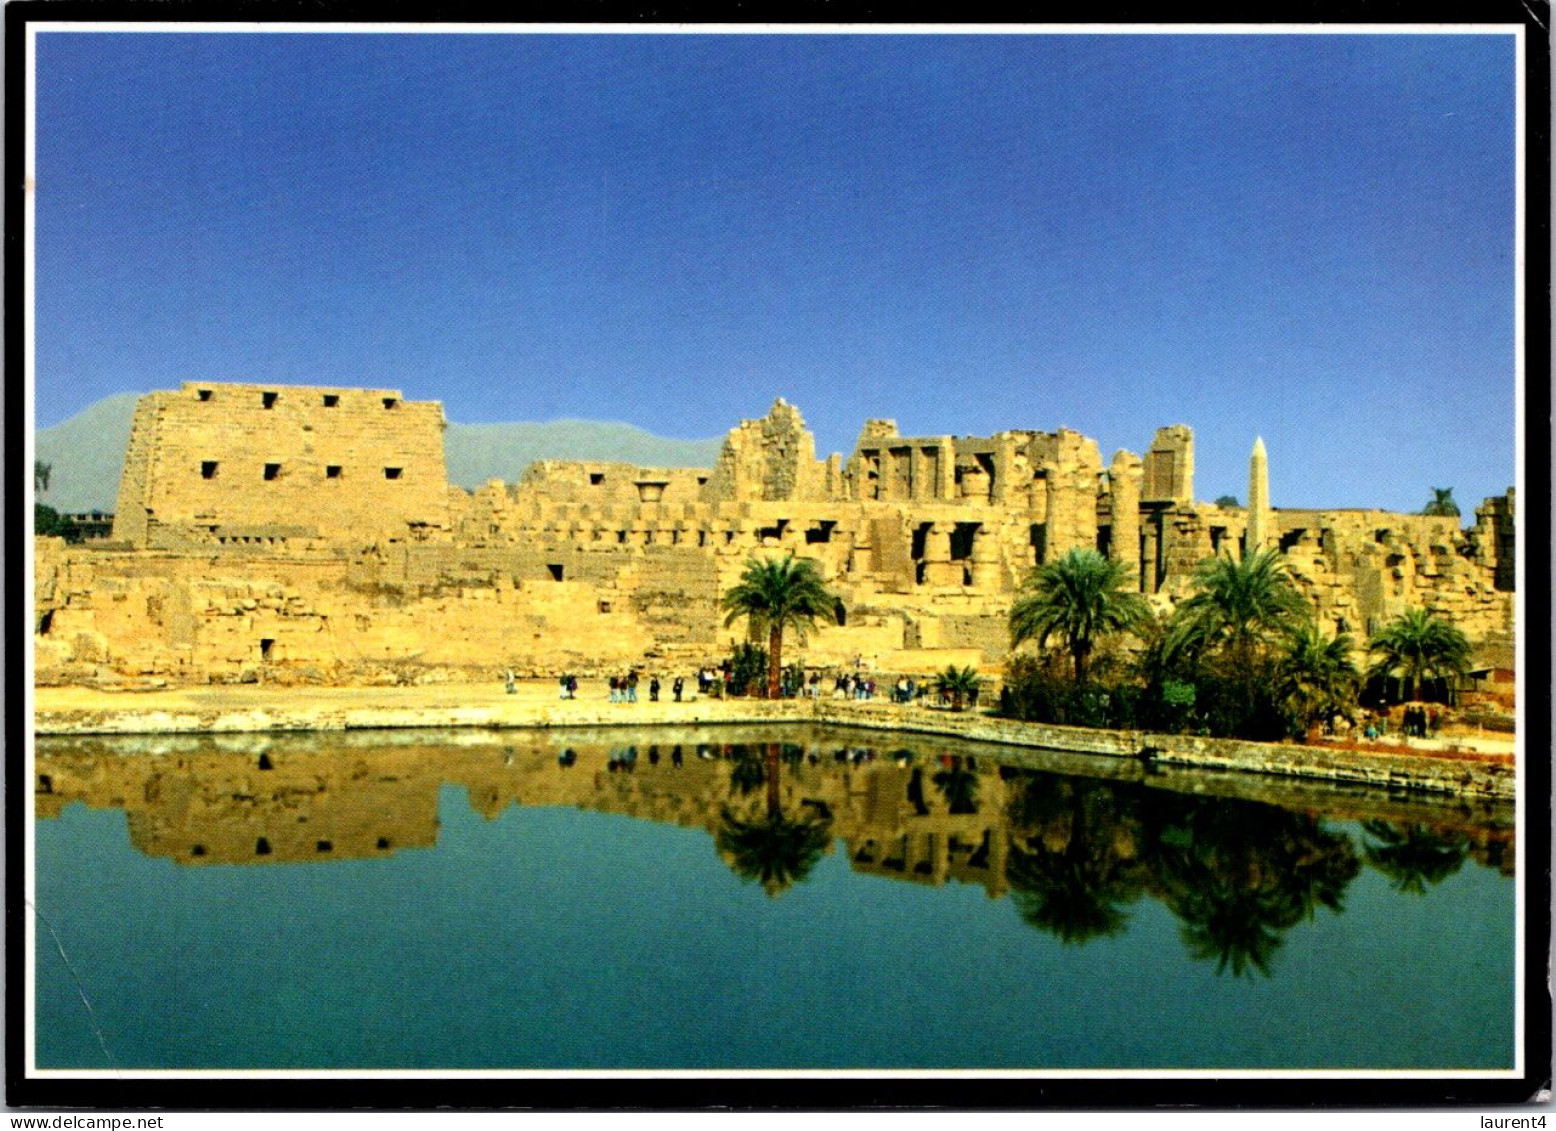 (1 R 12) Egypt (17 X 12 Cm) - Kamak Temple (posted) - Sphinx